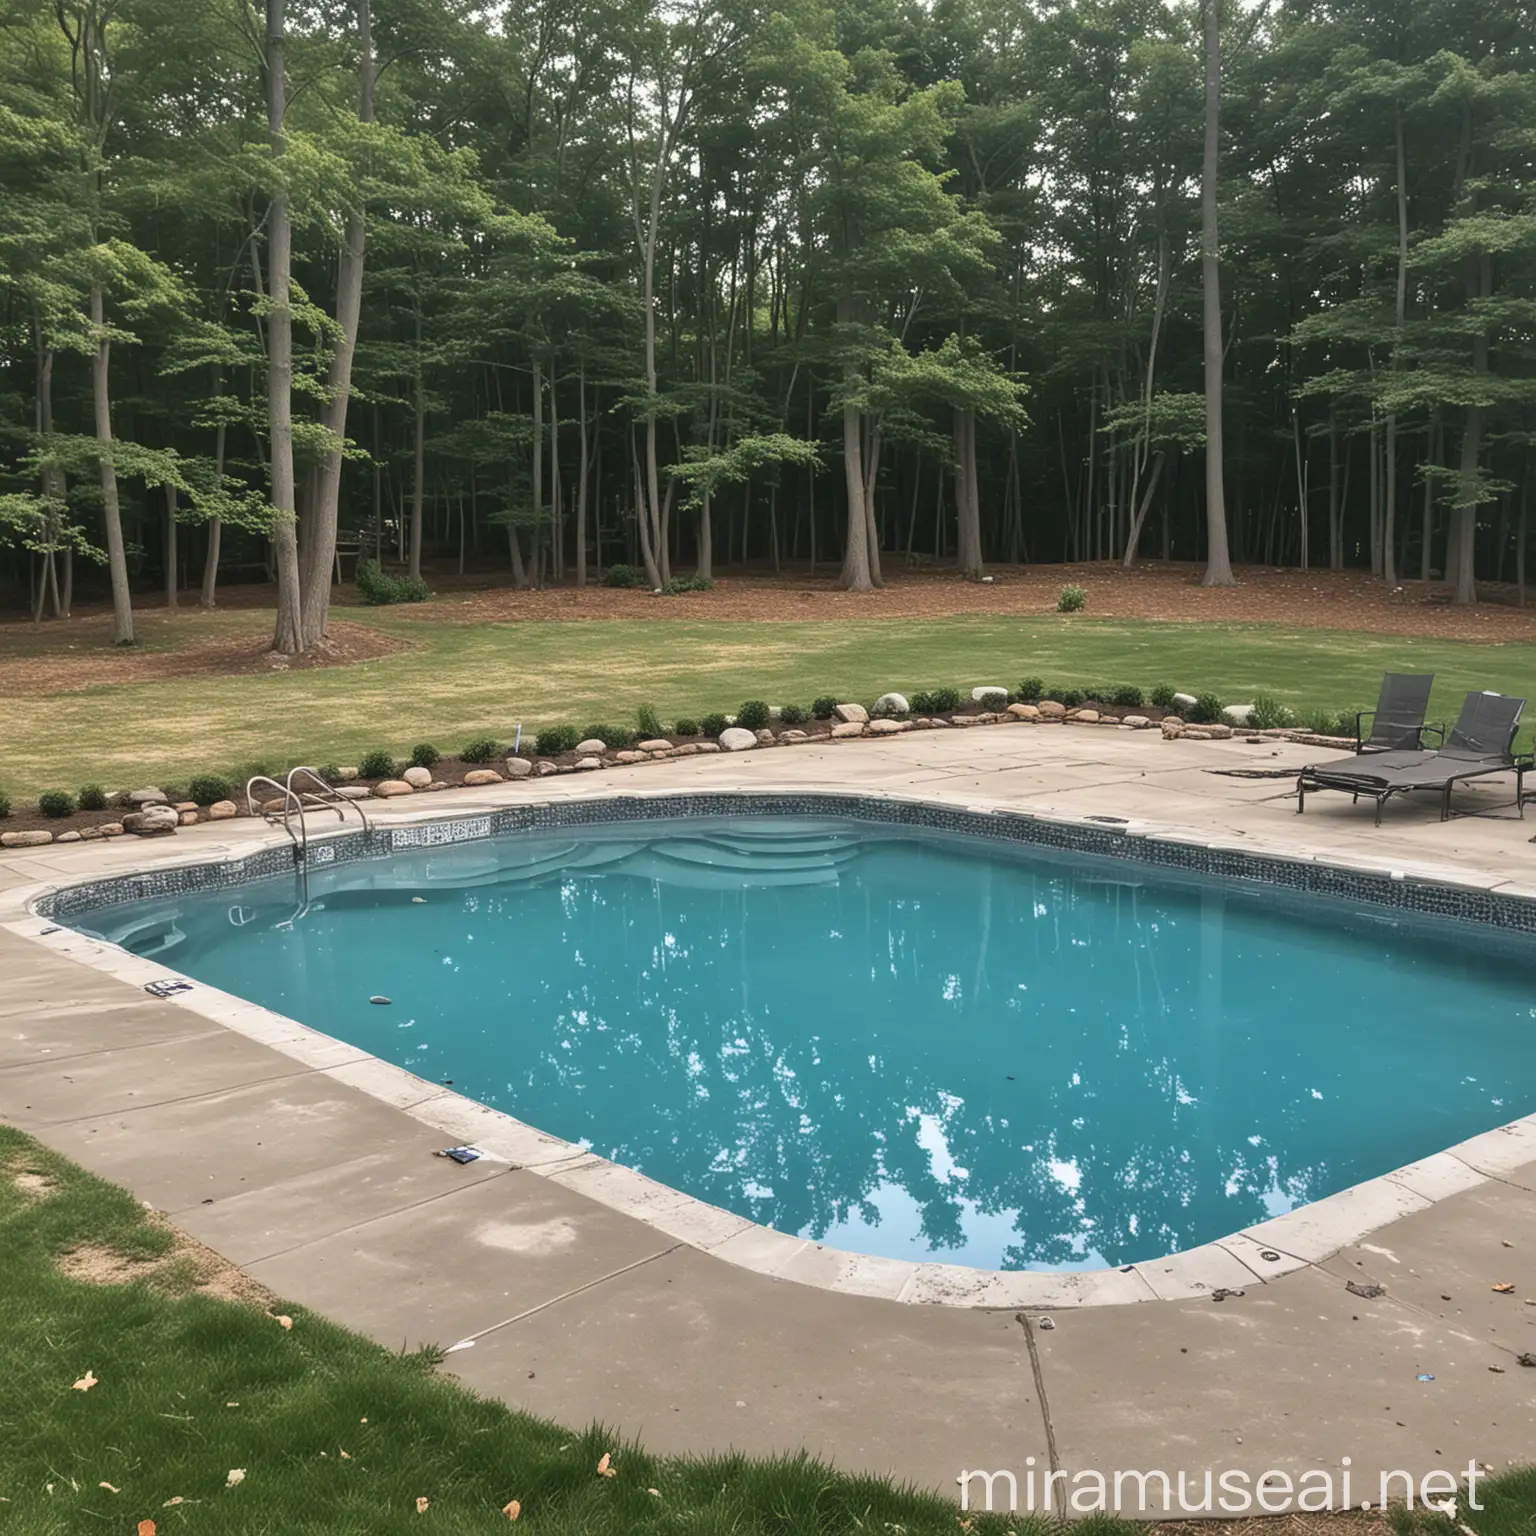 Newly Installed Swimming Pool in Toledo Ohio